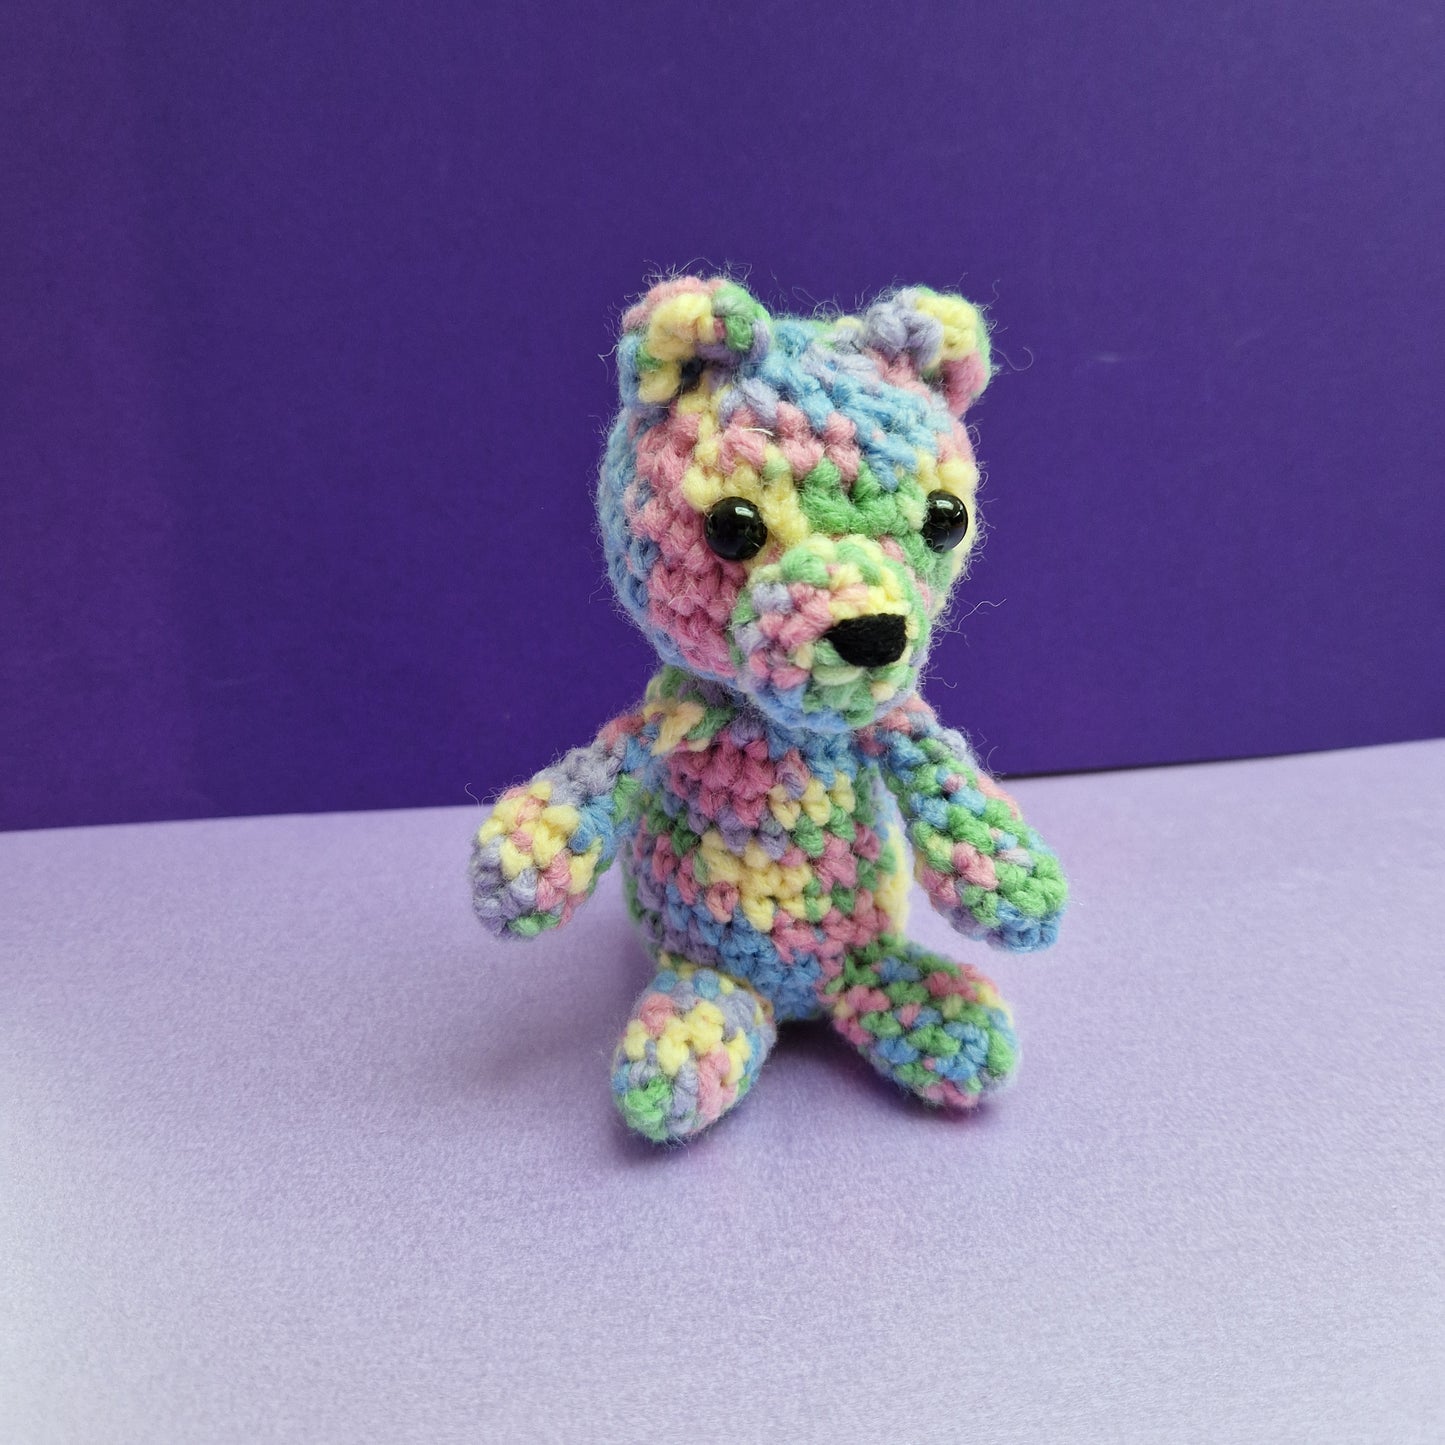 Rainbow crochet sitting bear